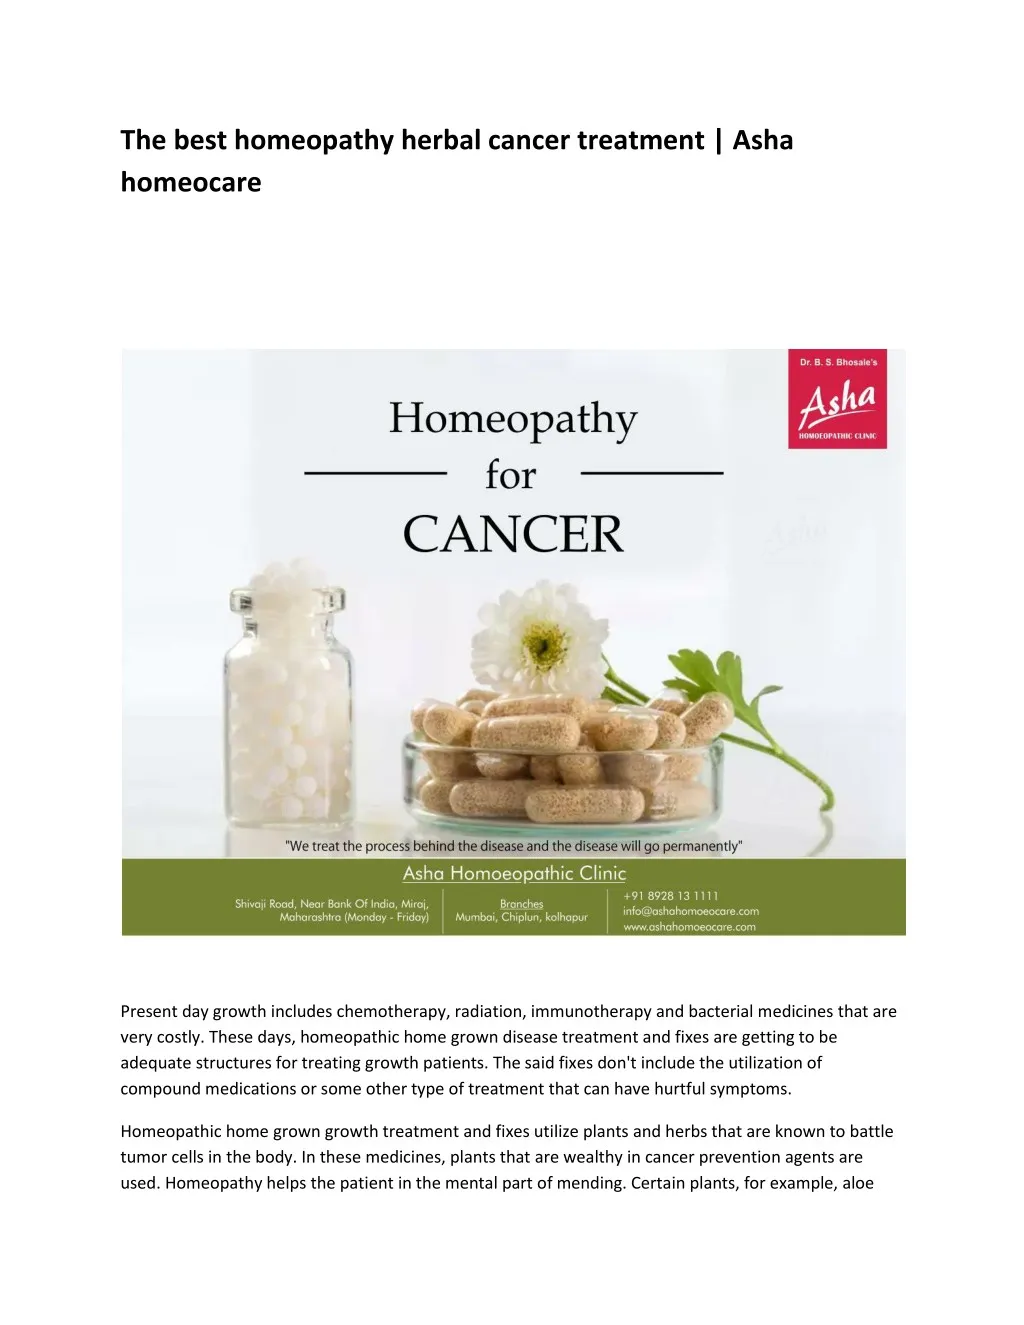 the best homeopathy herbal cancer treatment asha